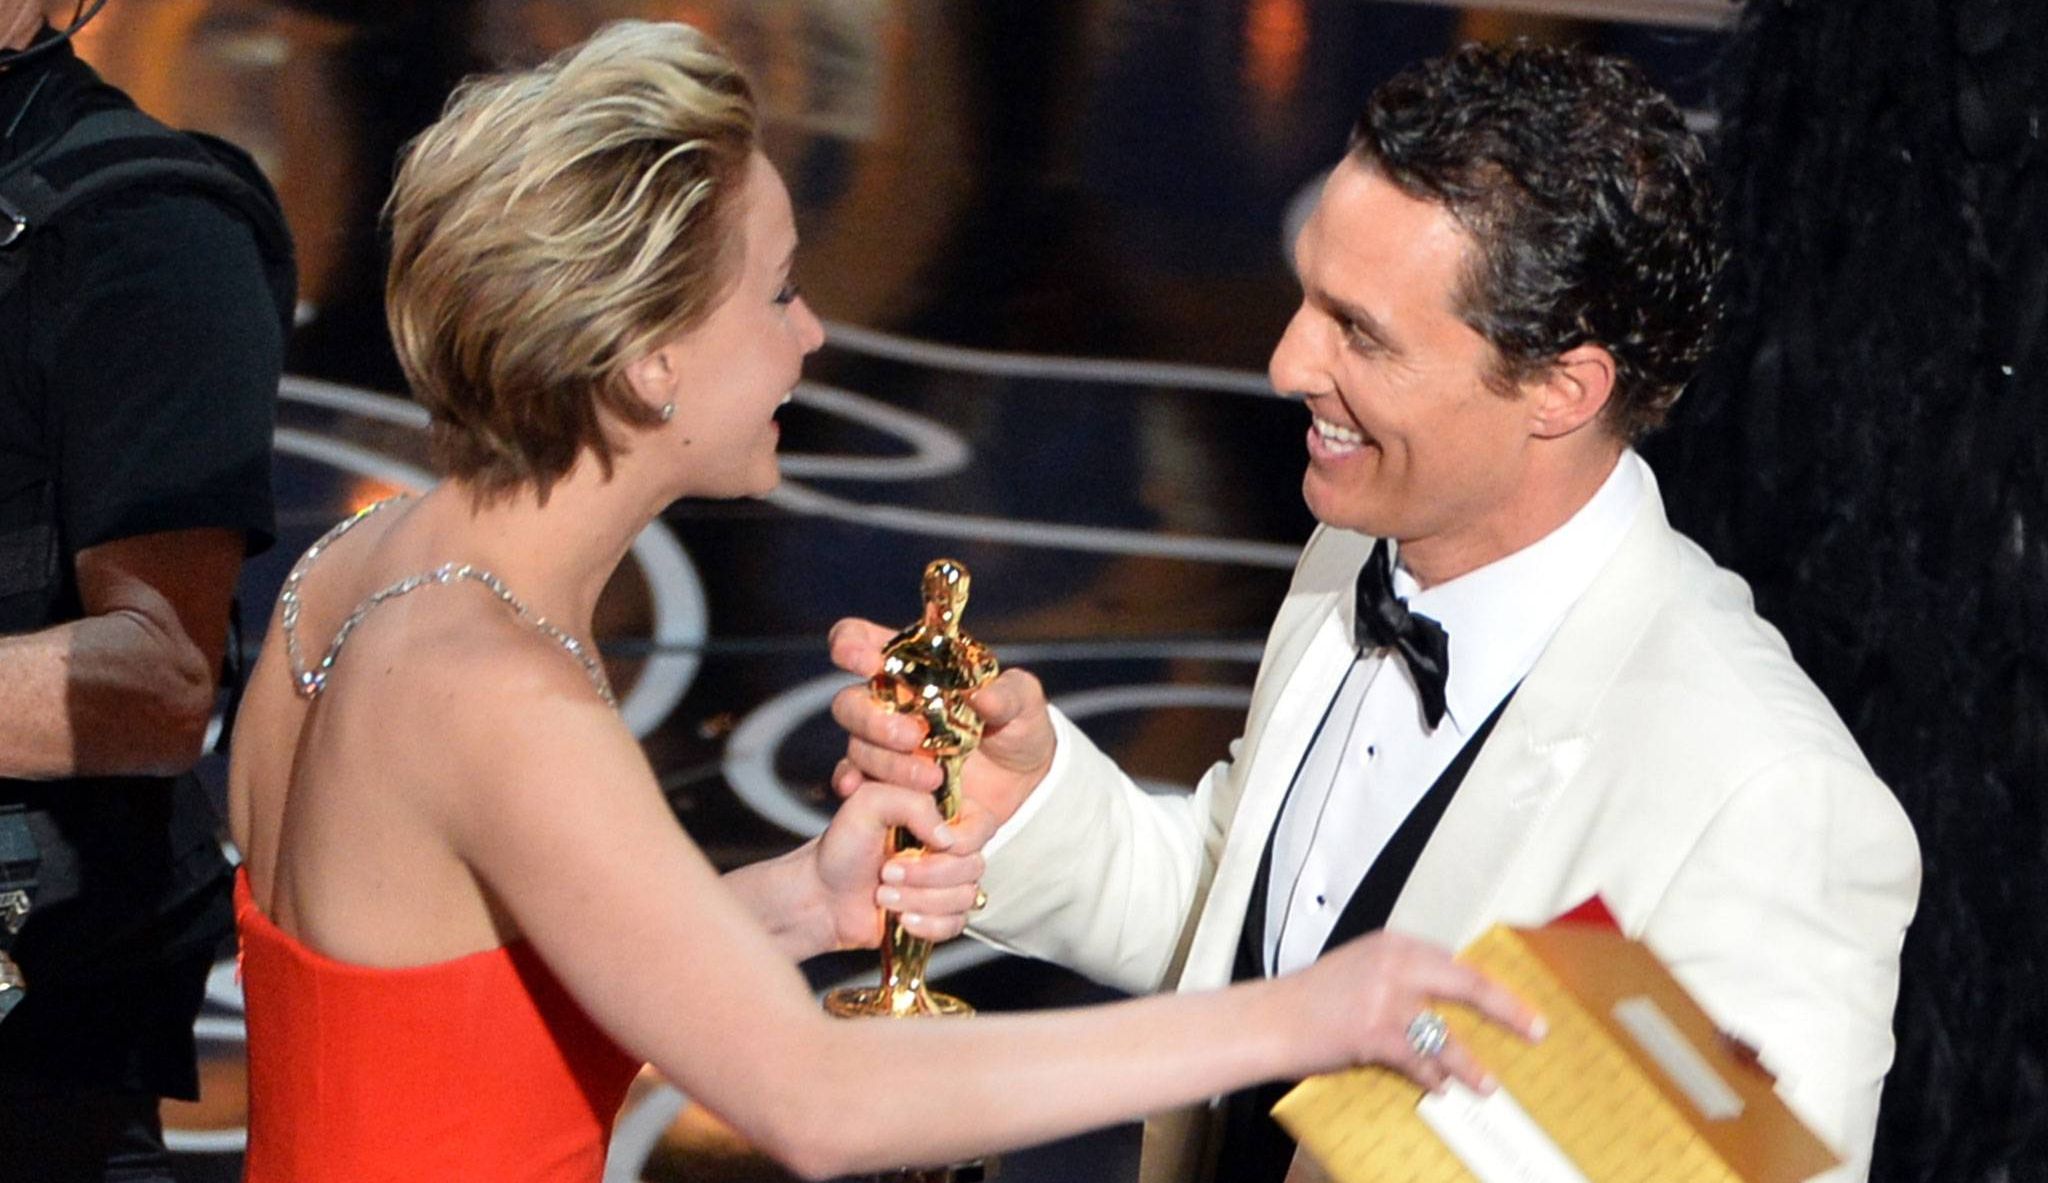 Matthew McConaughey accepting his Best Actor Oscar